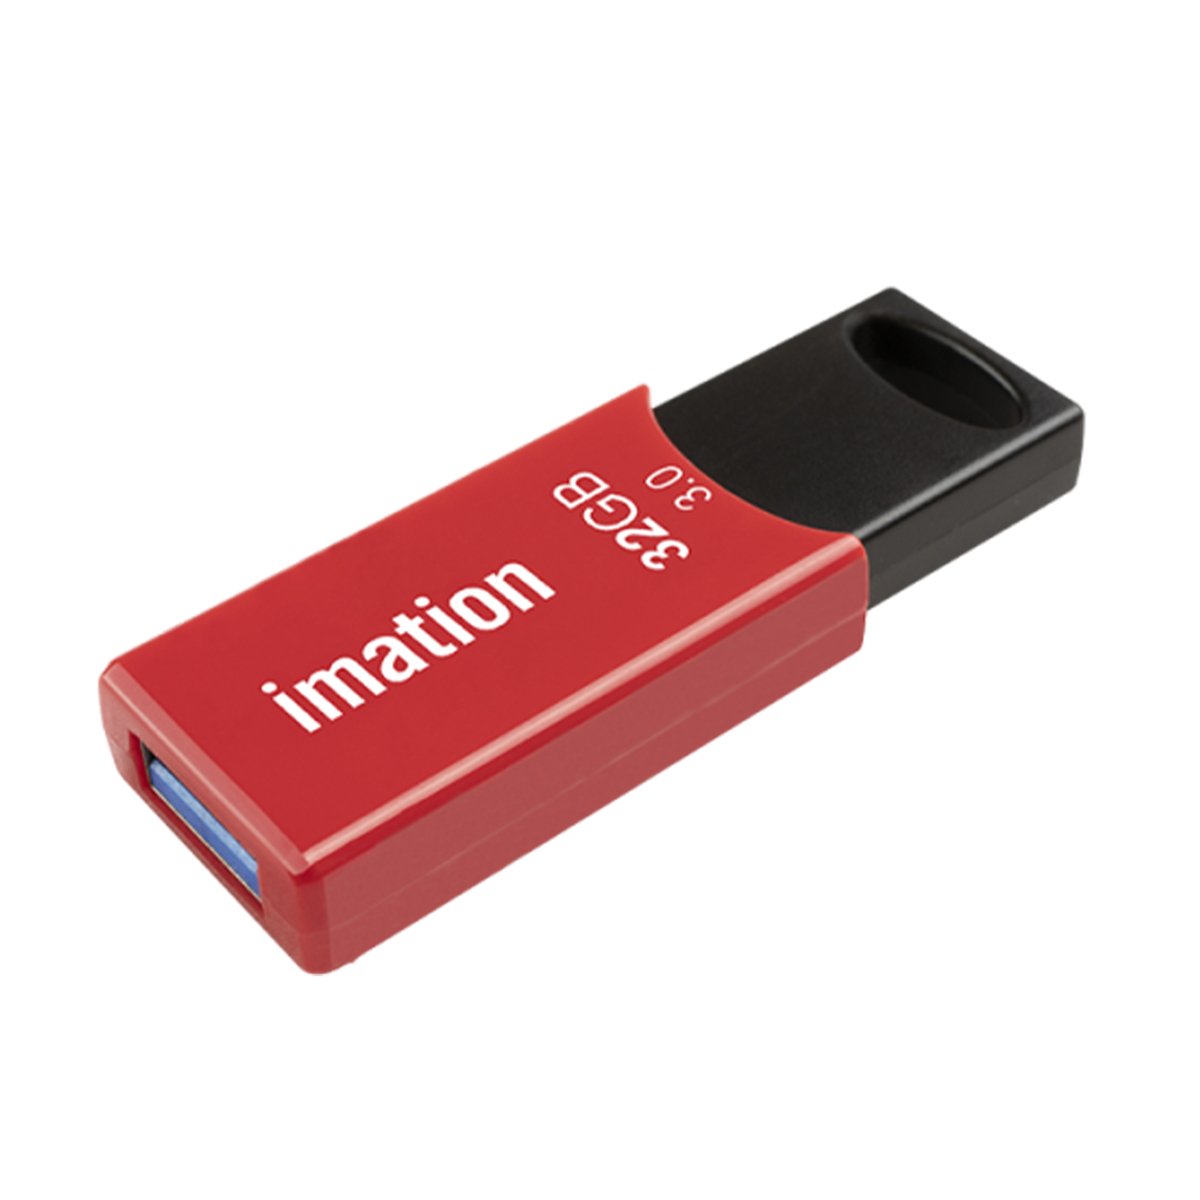 Imation Flash Drive SLEDGE3.0 32GB